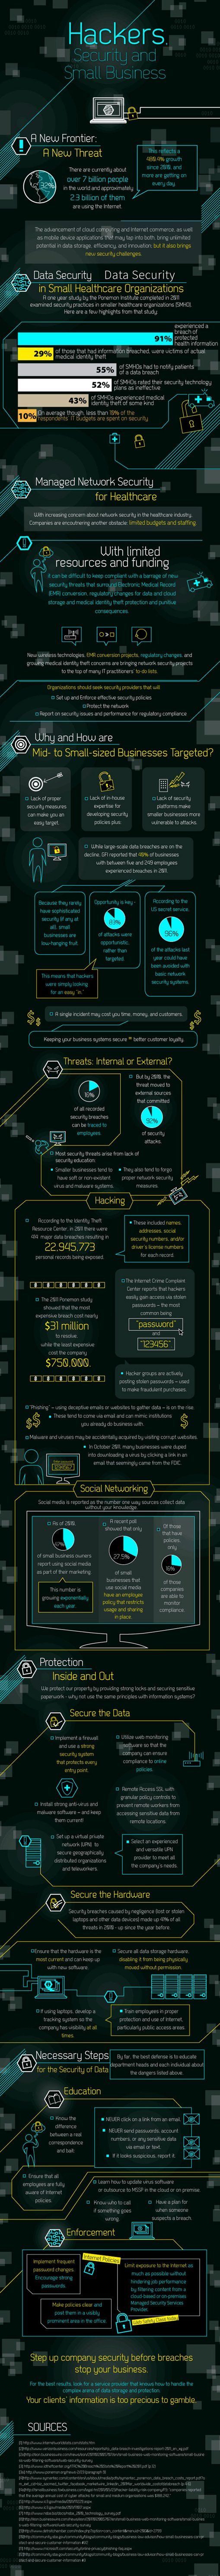 Infographic_hackers_sec_smb